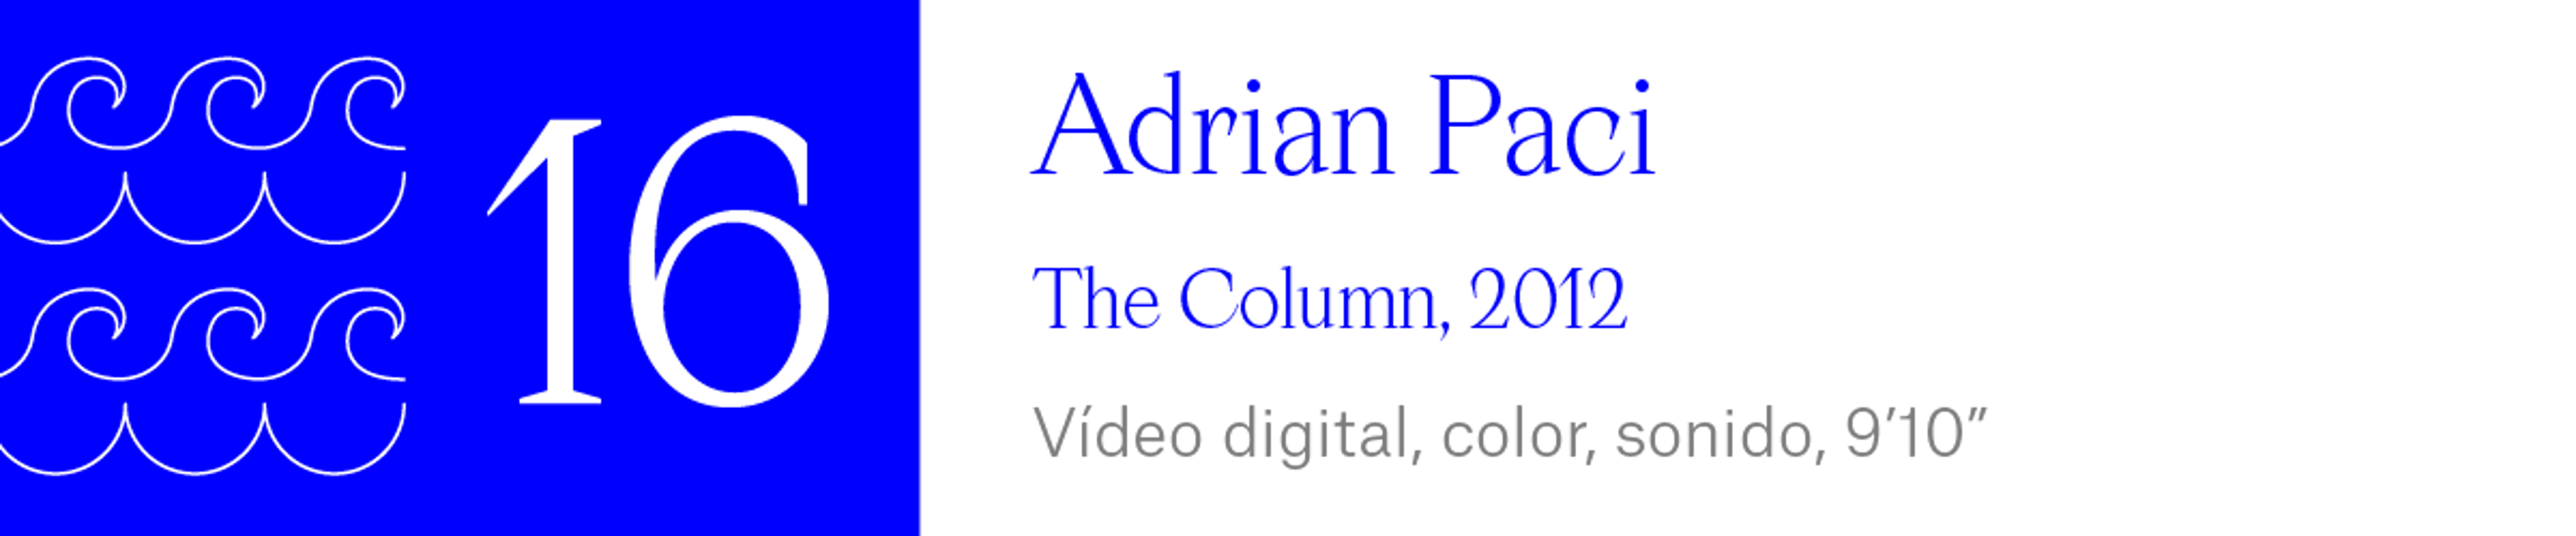 The Wave (8) Adrian Paci - The Column, 2012. Vídeo digital, color, sonido, 9’10”